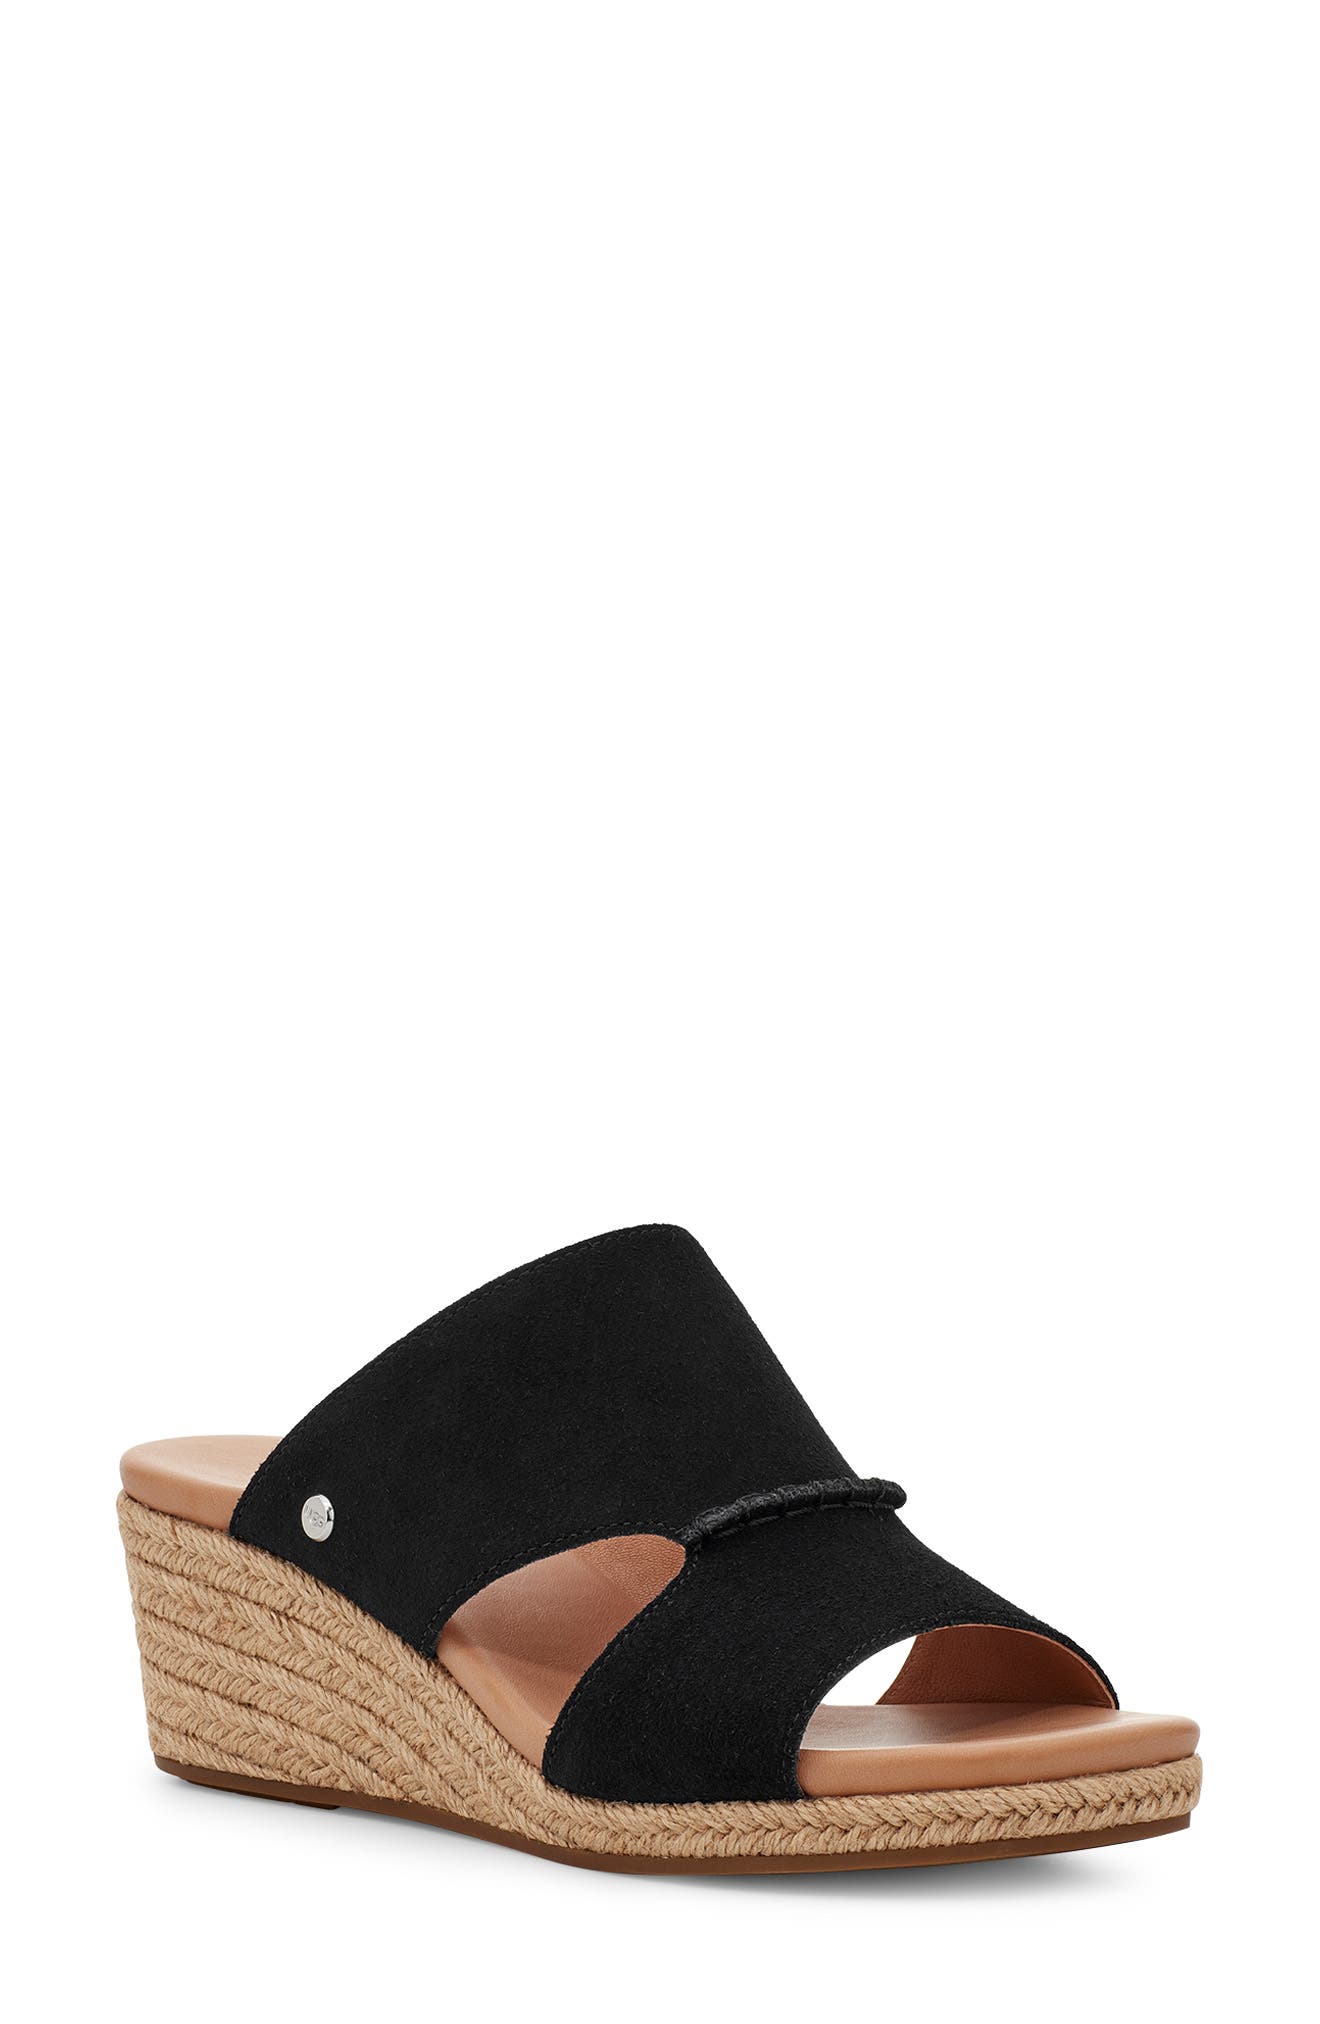 Ladies Womens Beauty Brown Slip On Flat Open Toe Wedge Holiday Gift Sandals Mule 